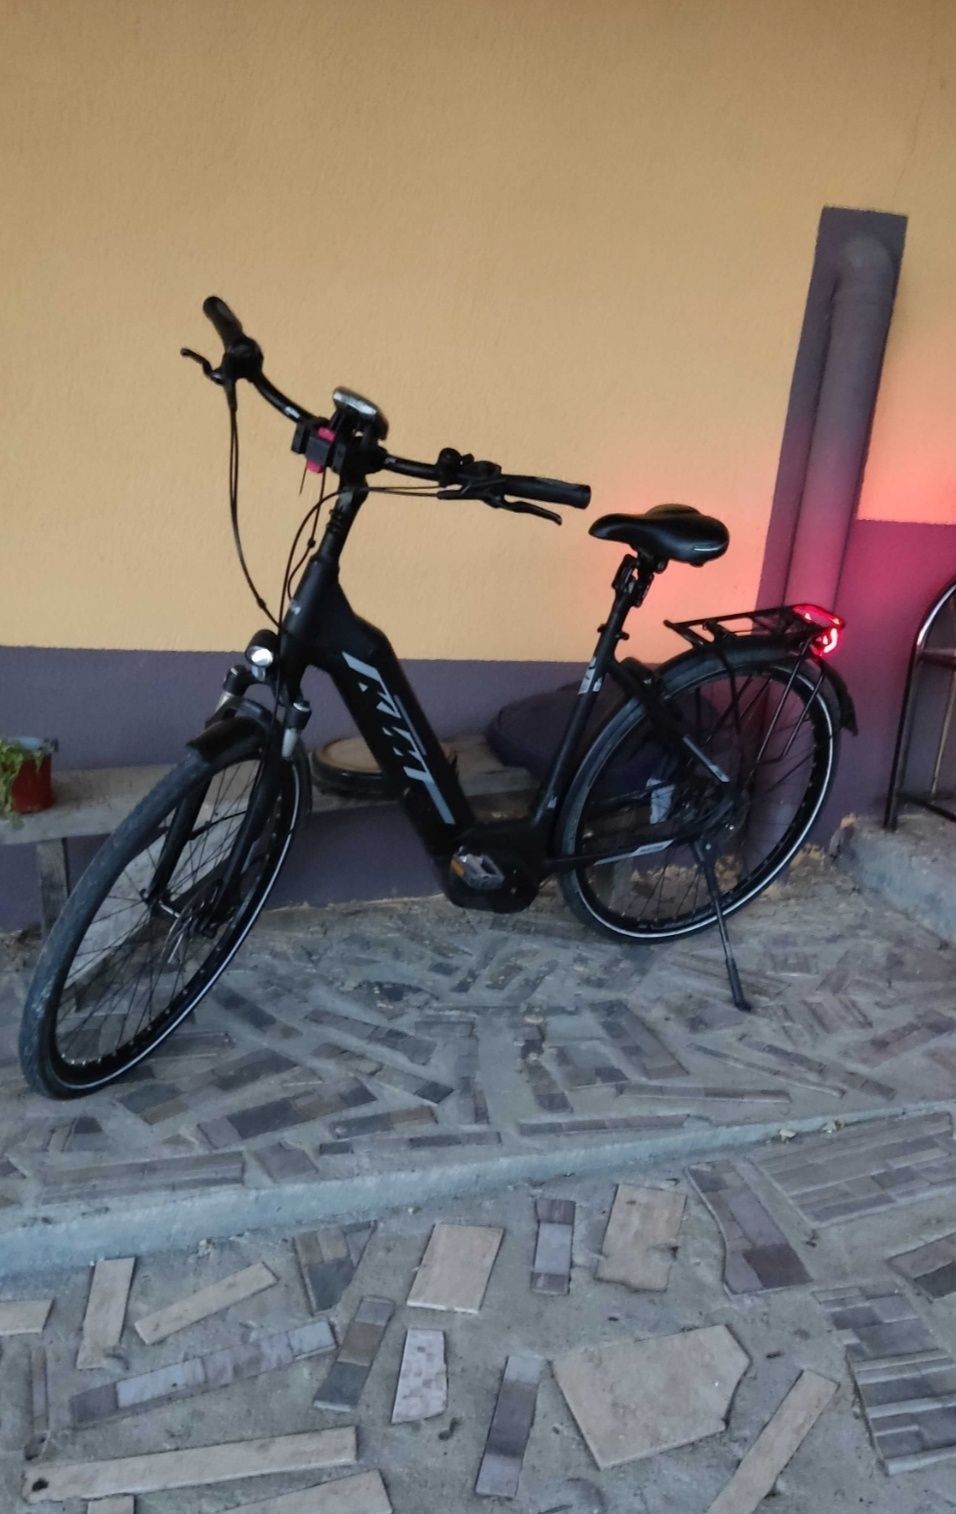 Cautam livratori / Bolt food / tazz / Bucuresti / inchiriem biciclete